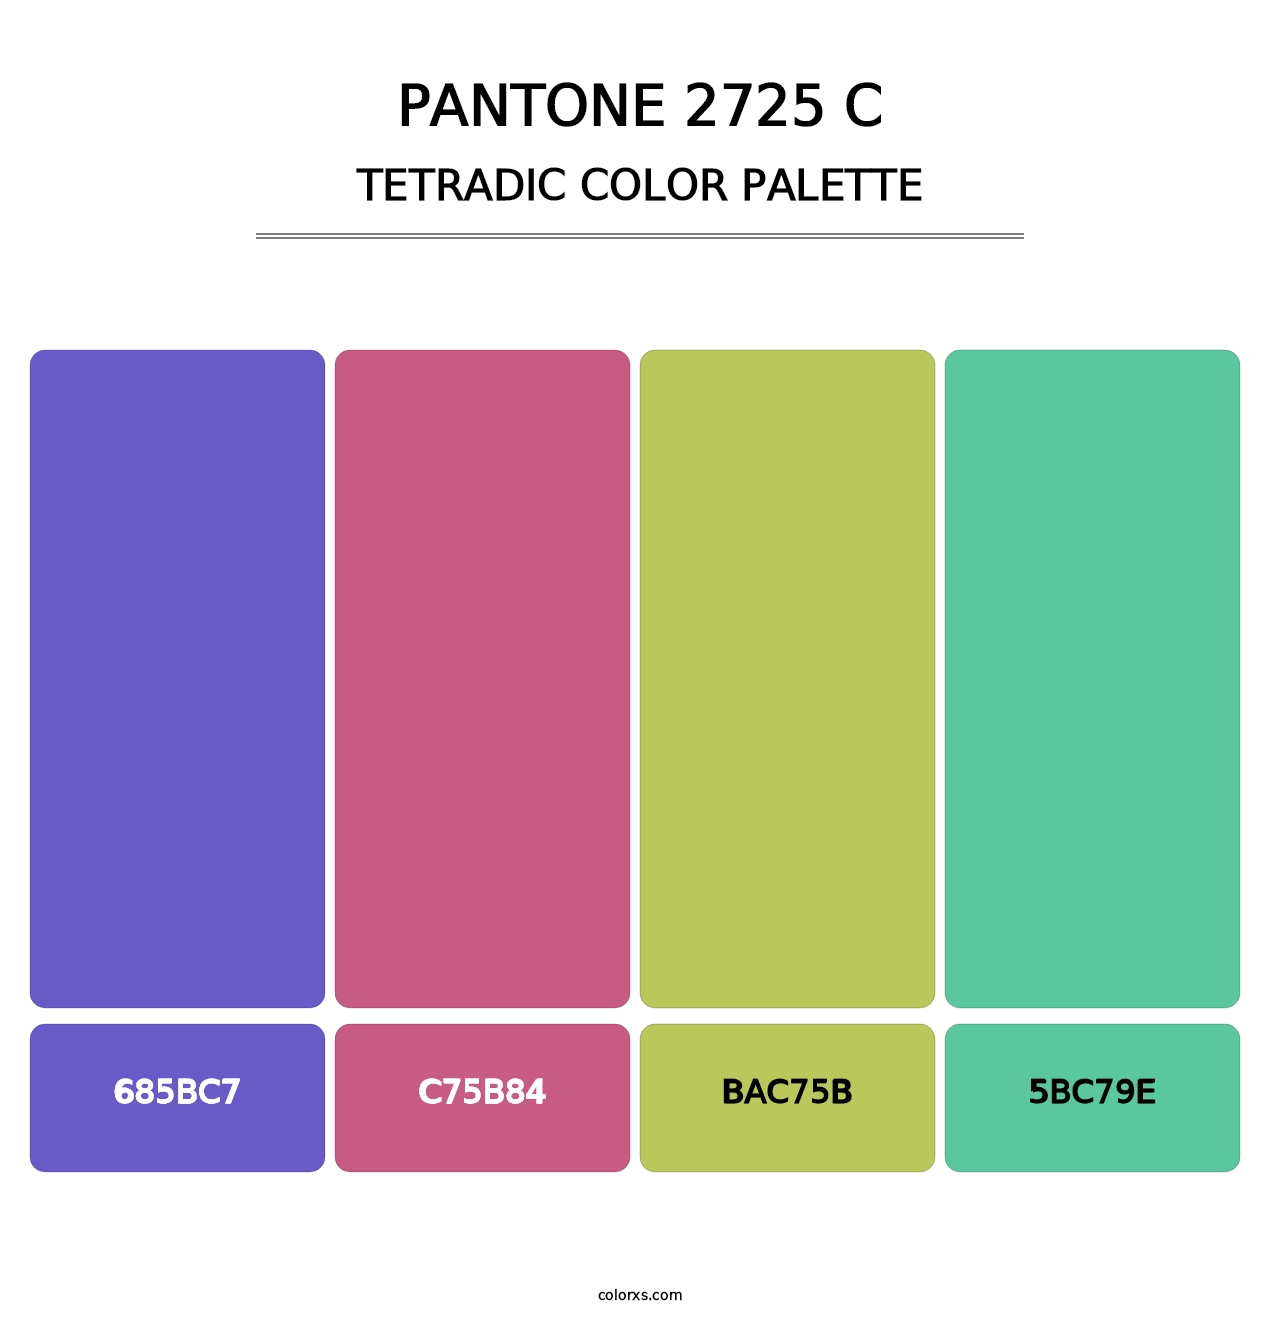 PANTONE 2725 C - Tetradic Color Palette